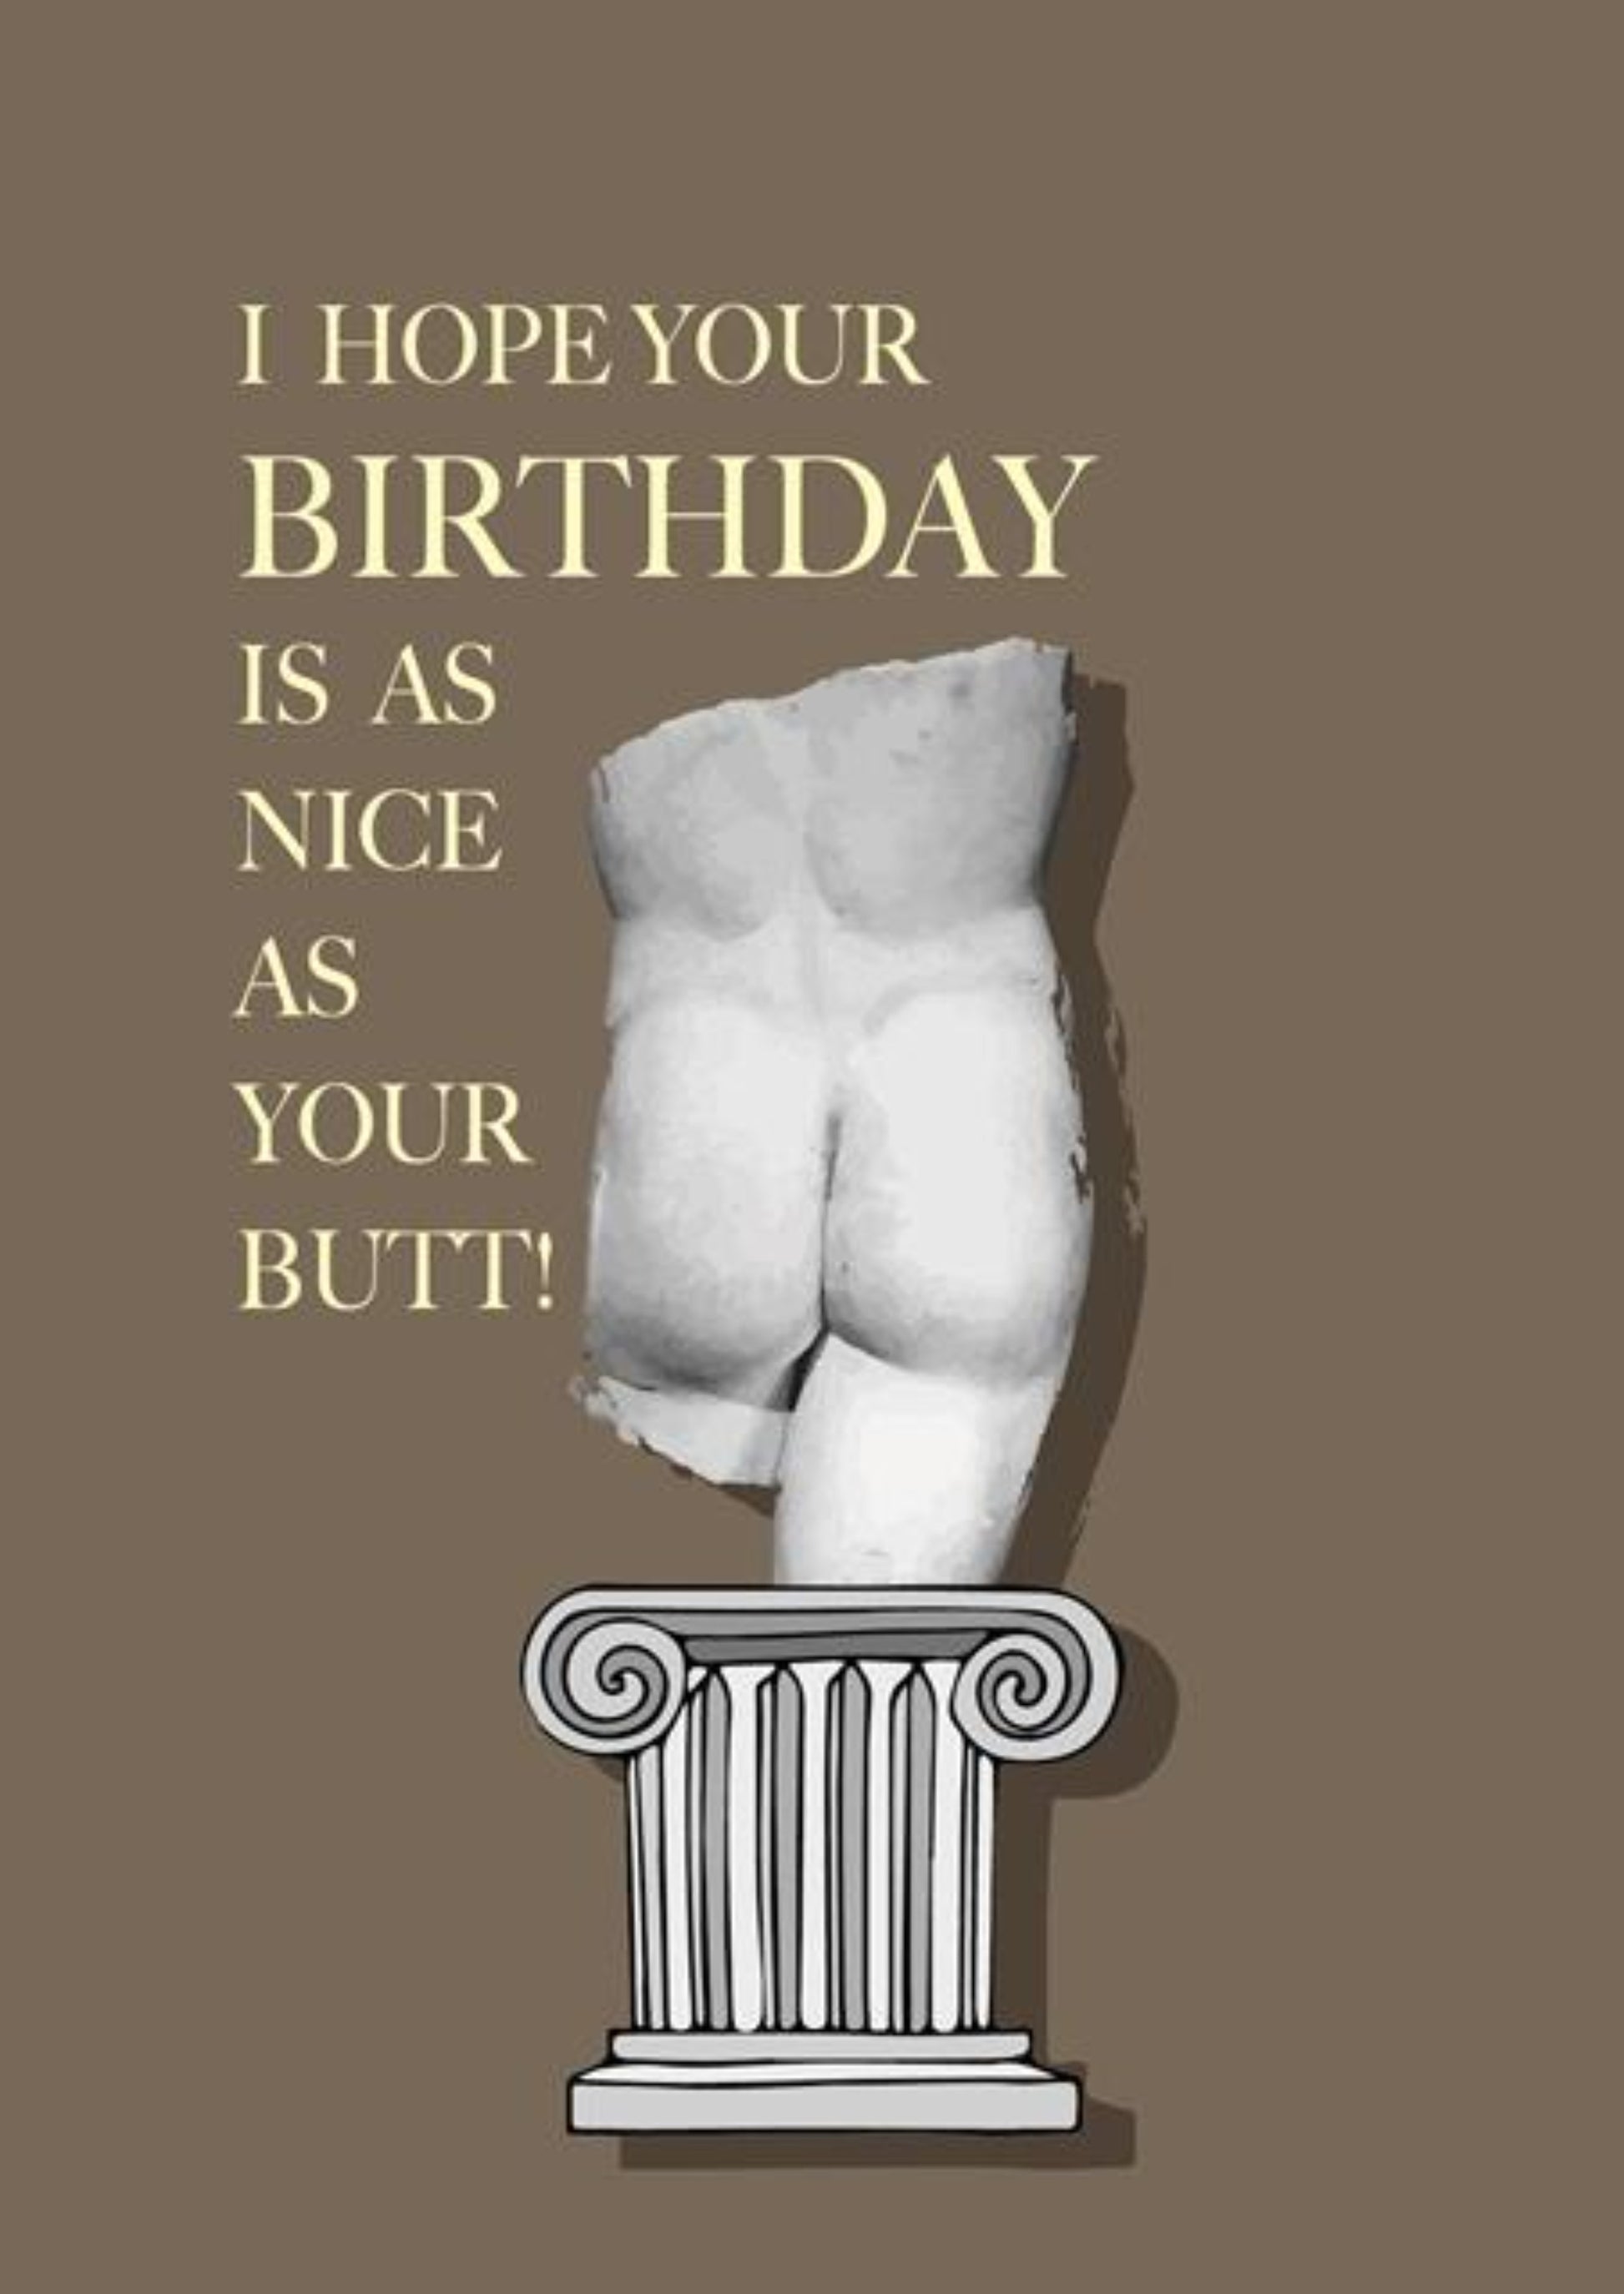 Nice Butt! Happy Birthday Funny Greeting Card.